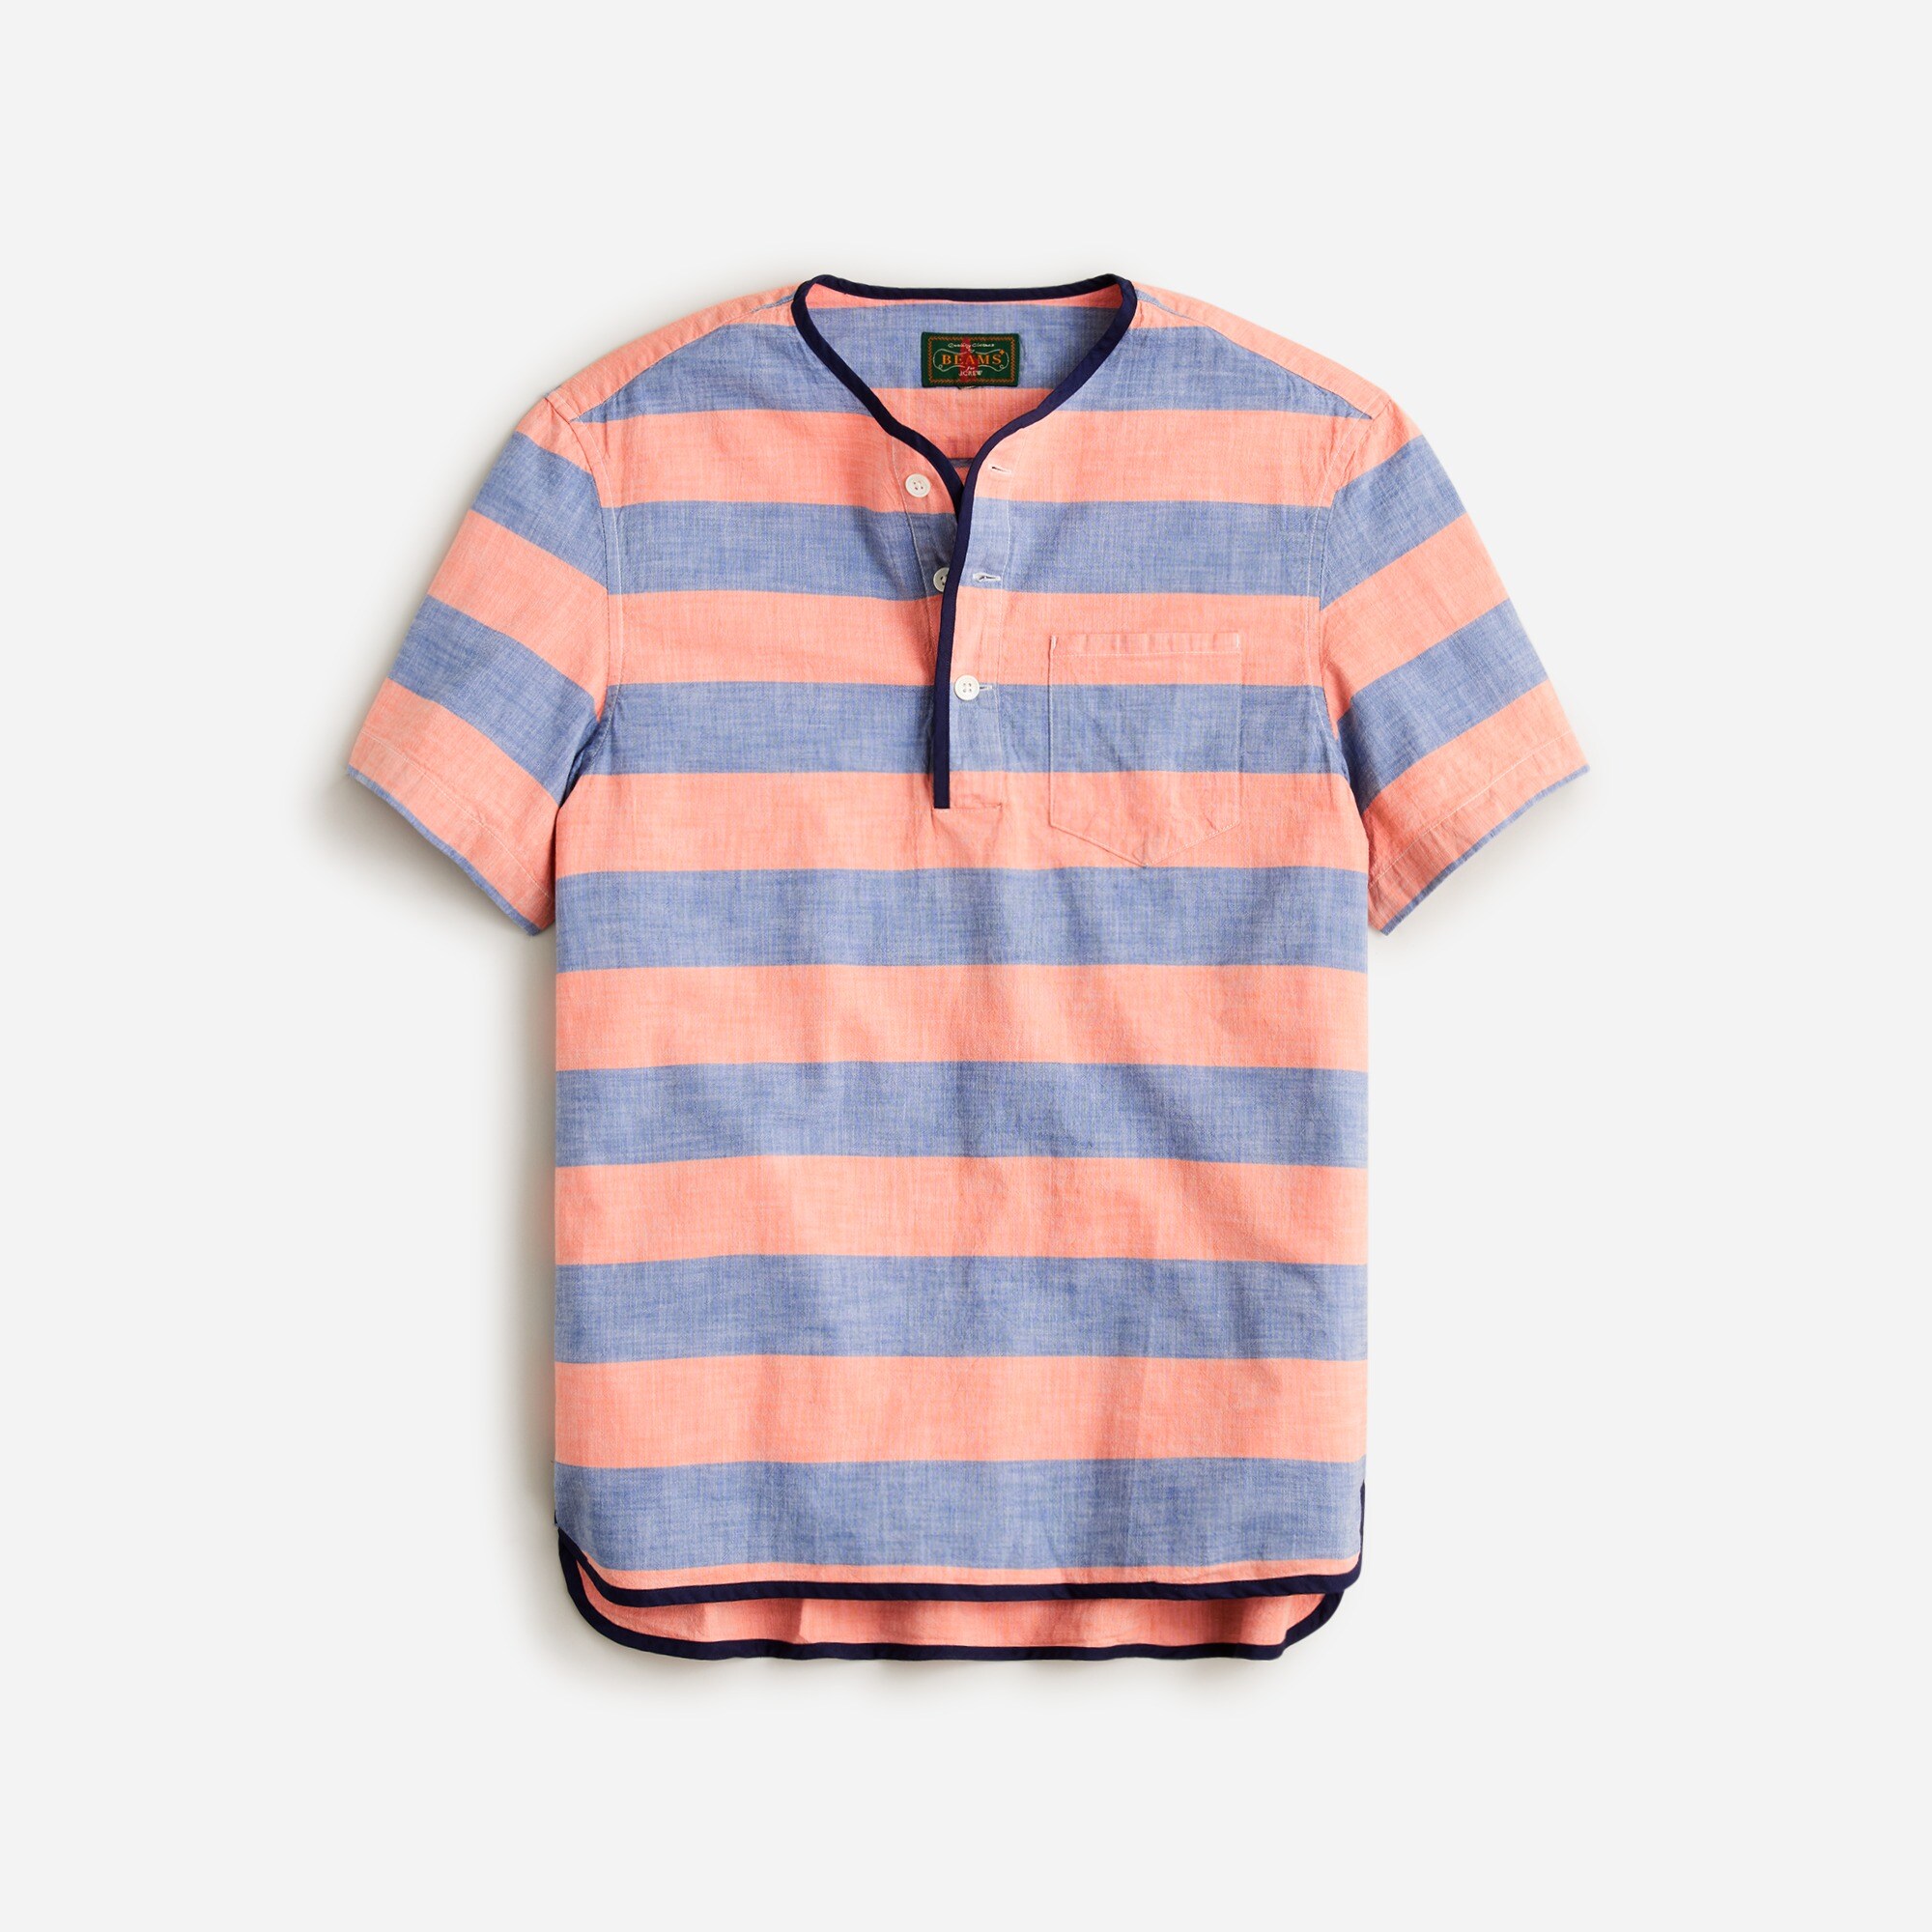  BEAMS PLUS X J.Crew short-sleeve chambray popover shirt in stripe